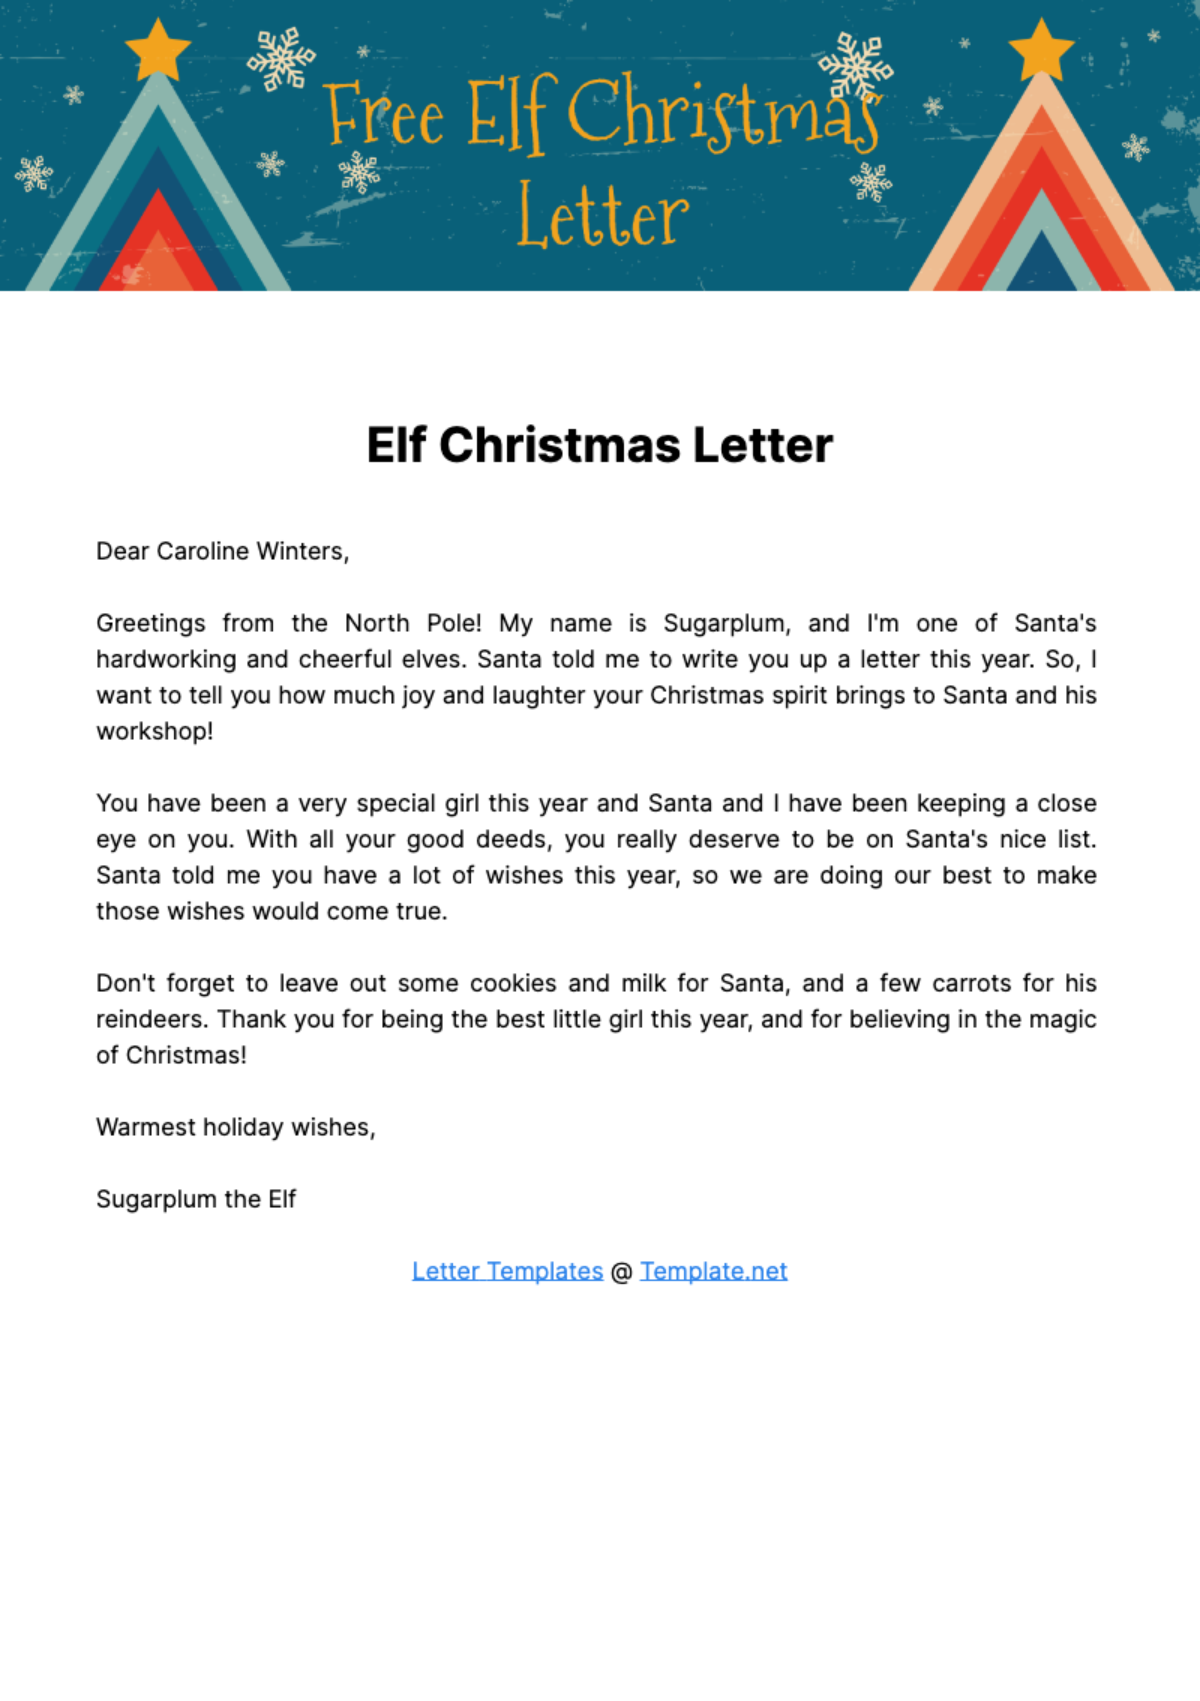 Elf Christmas Letter Template